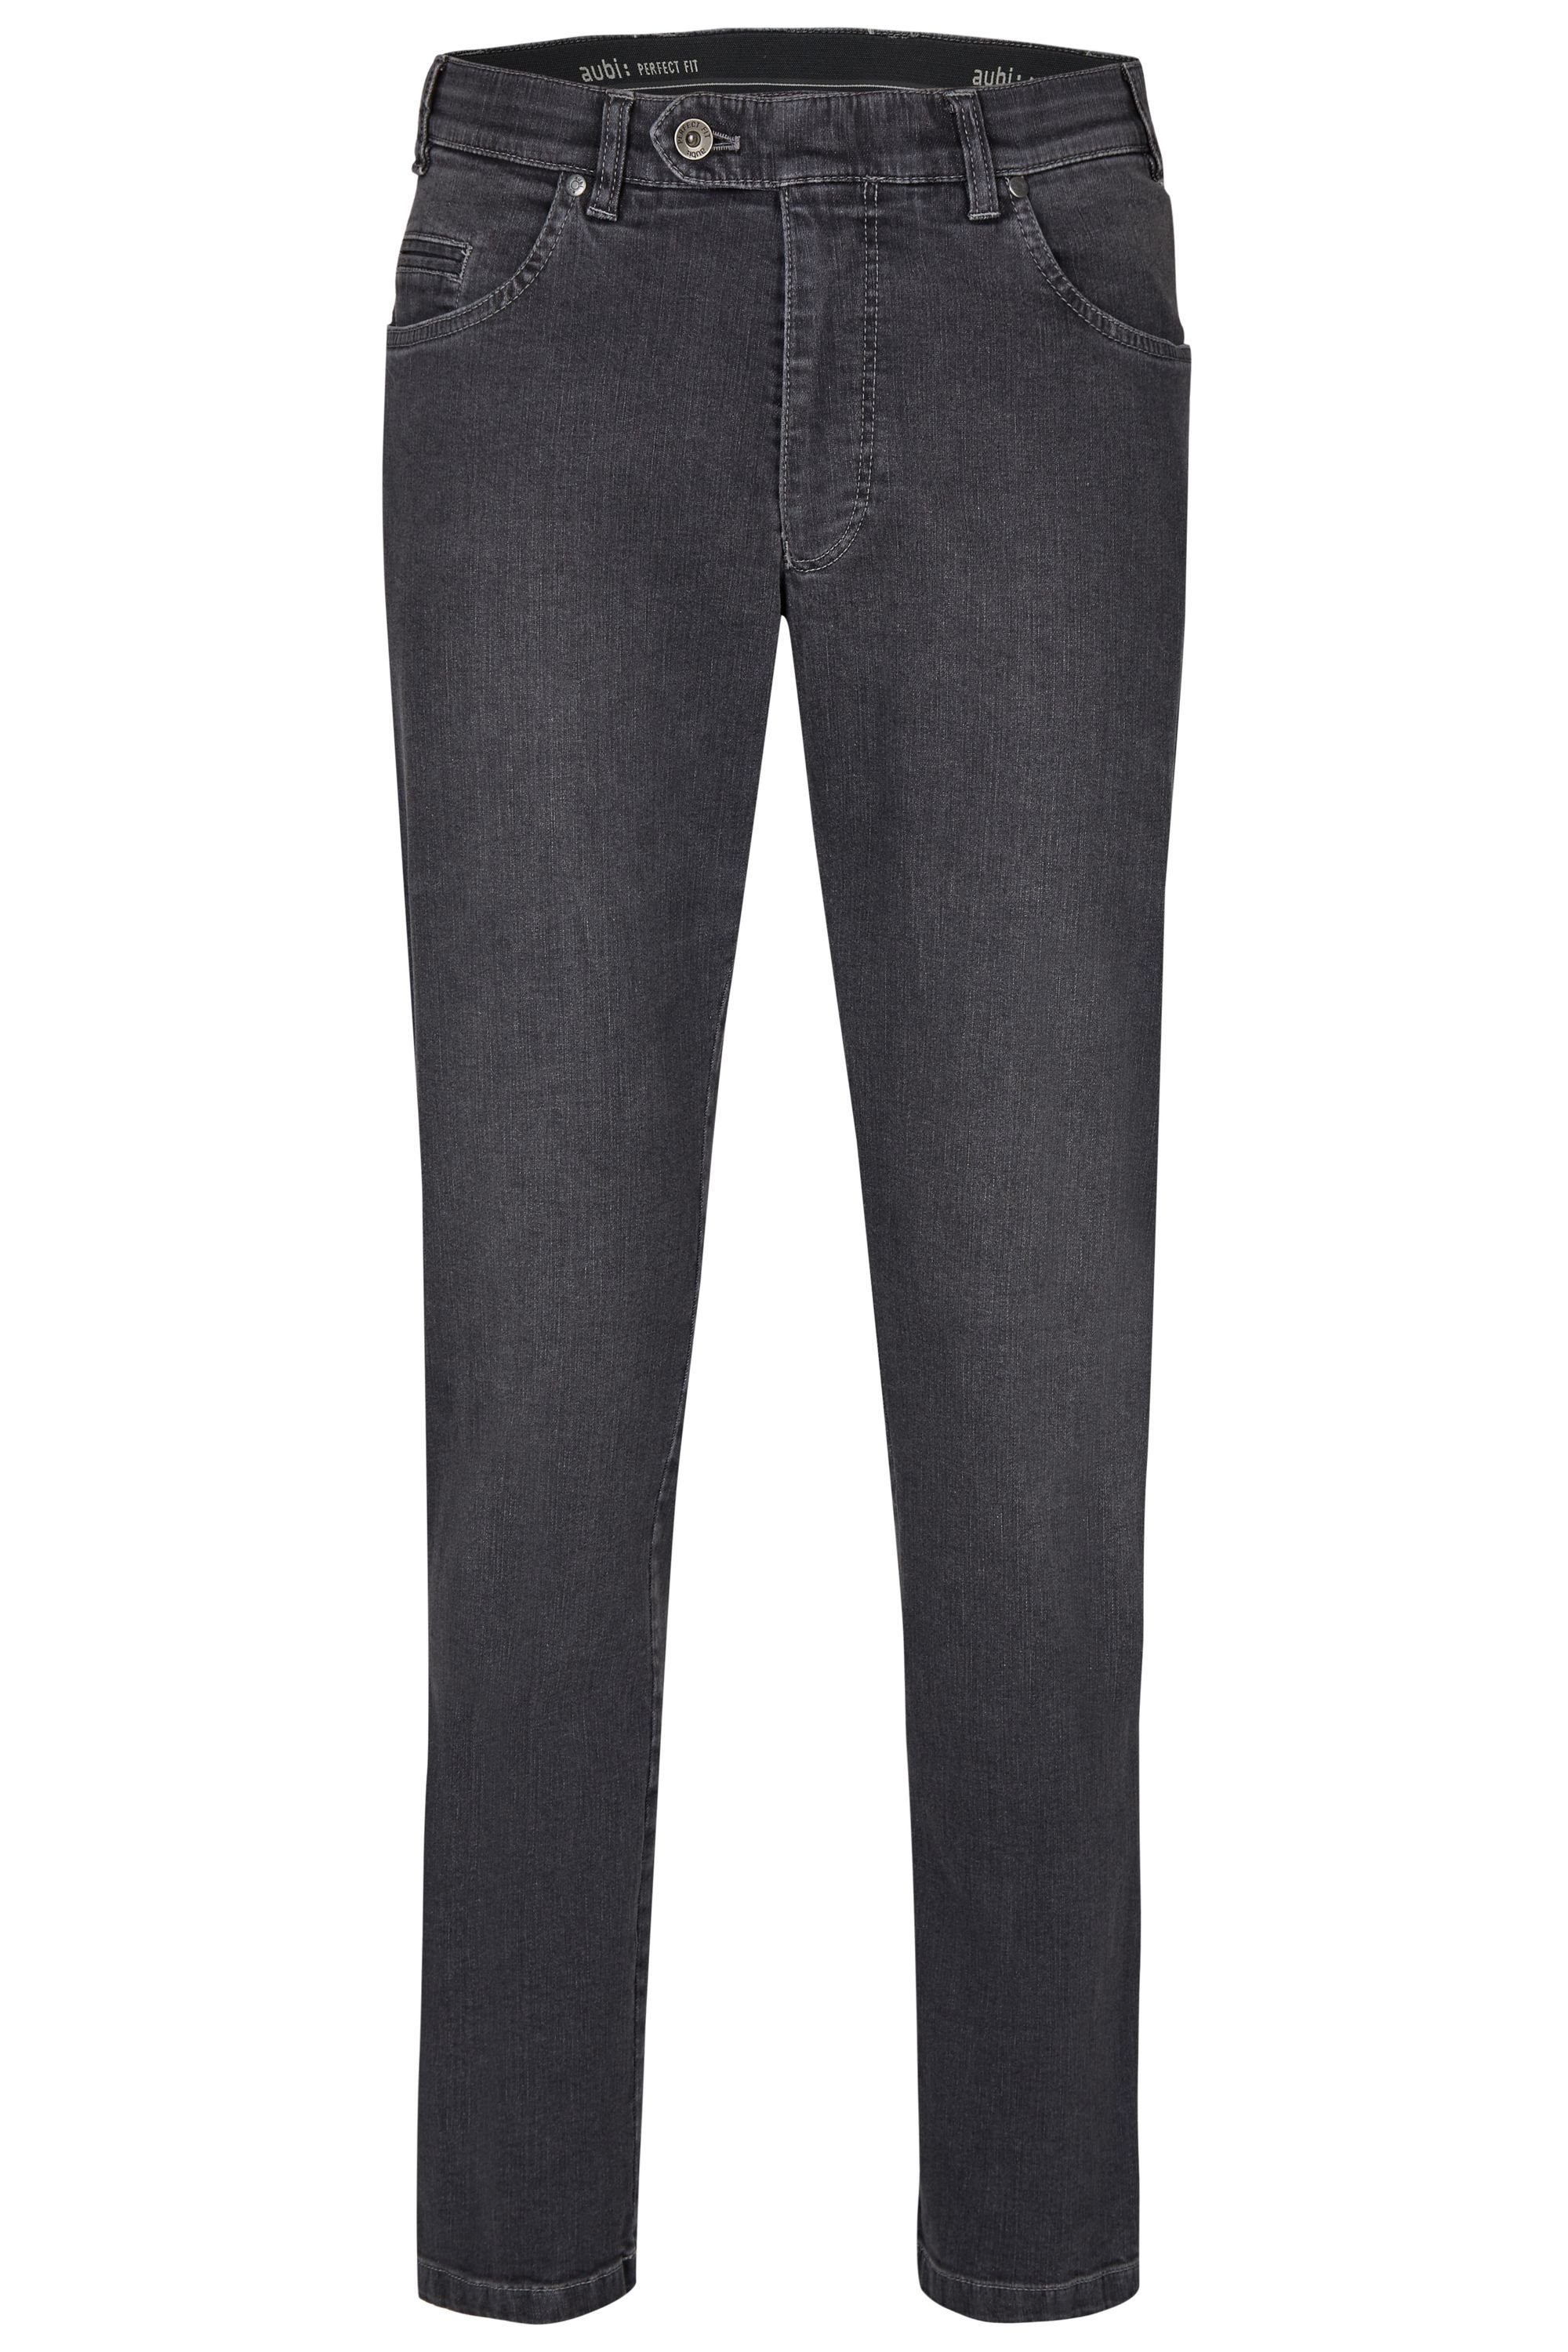 aubi: Bequeme Jeans aubi Perfect Fit Herren Jeans Hose Stretch aus Baumwolle High Flex Modell 577 grey soft used (53) | Jeans